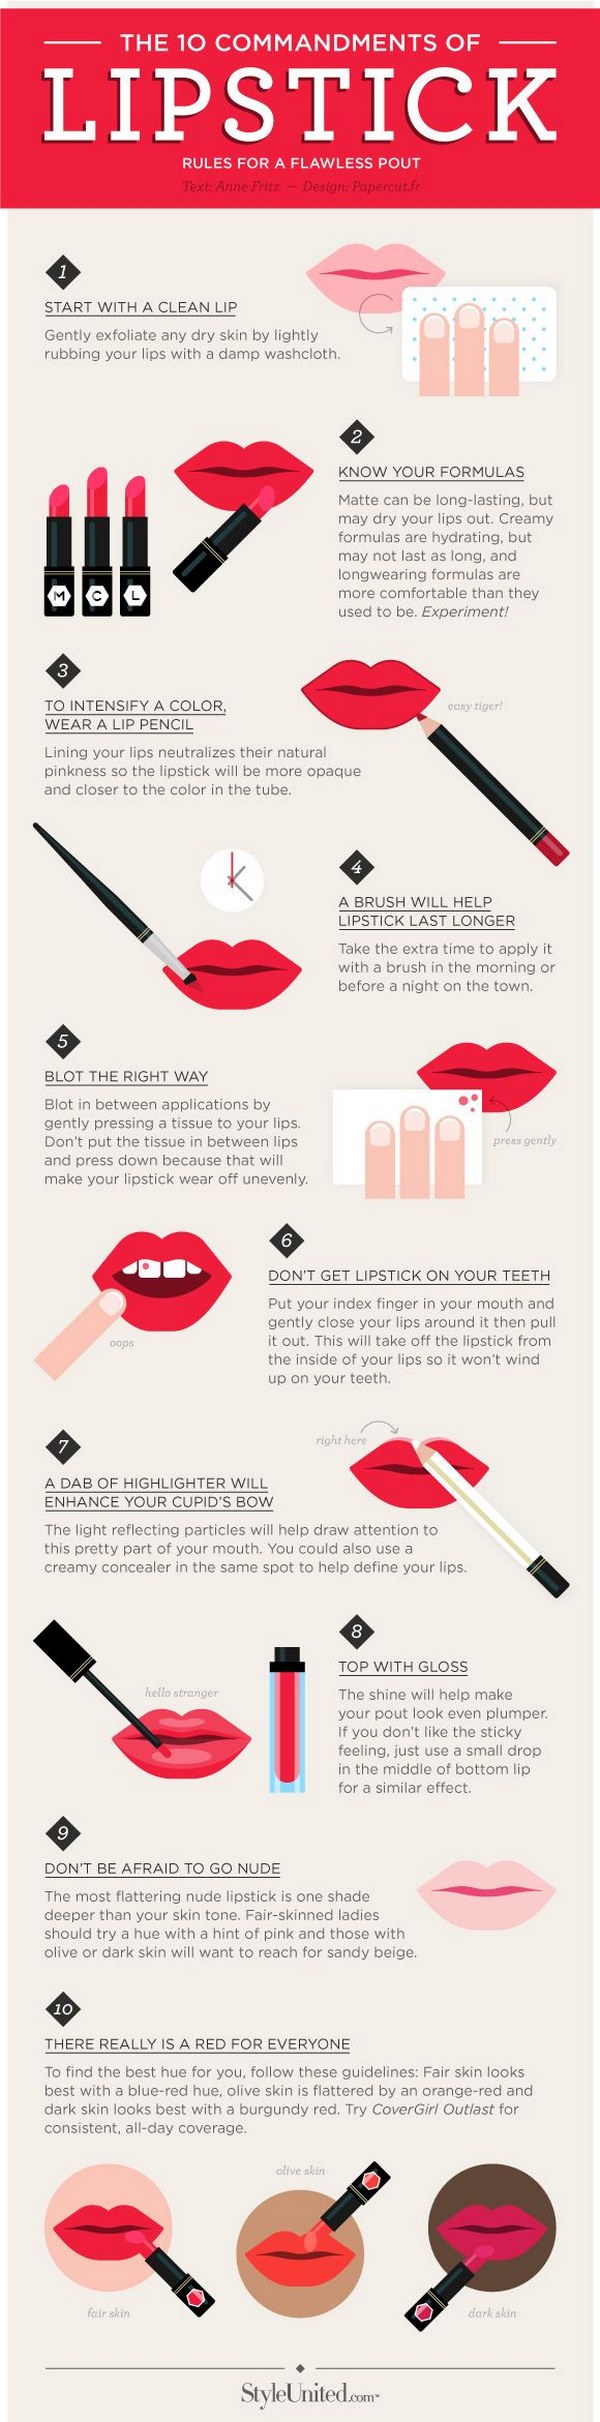 The 10 Commandments of Lipstick via Style United